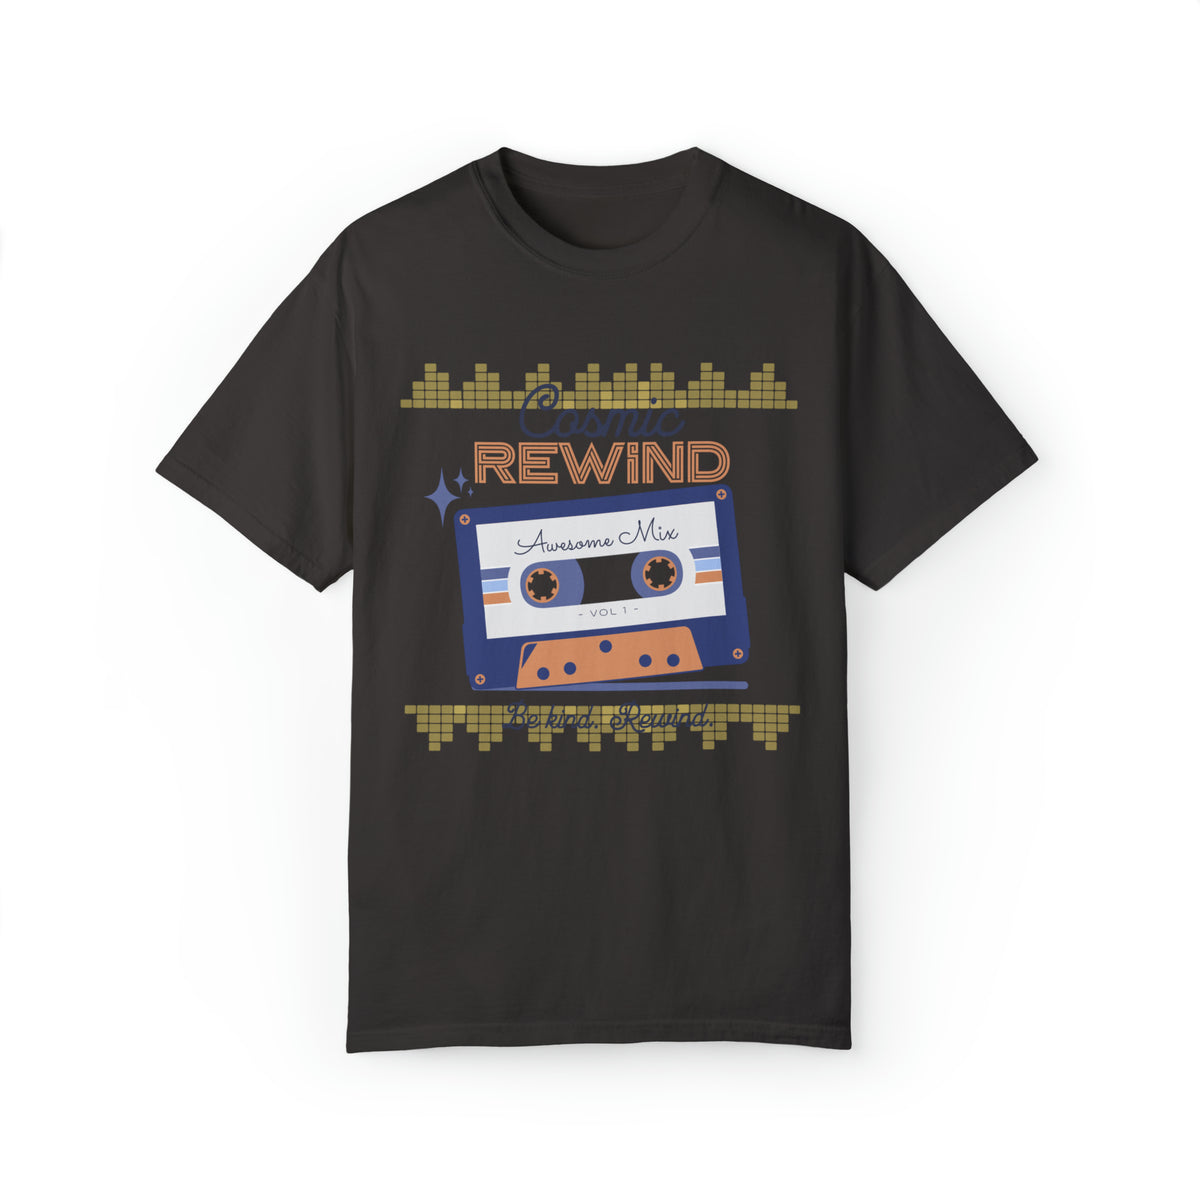 Cosmic Rewind Comfort Colors Unisex Garment-Dyed T-shirt